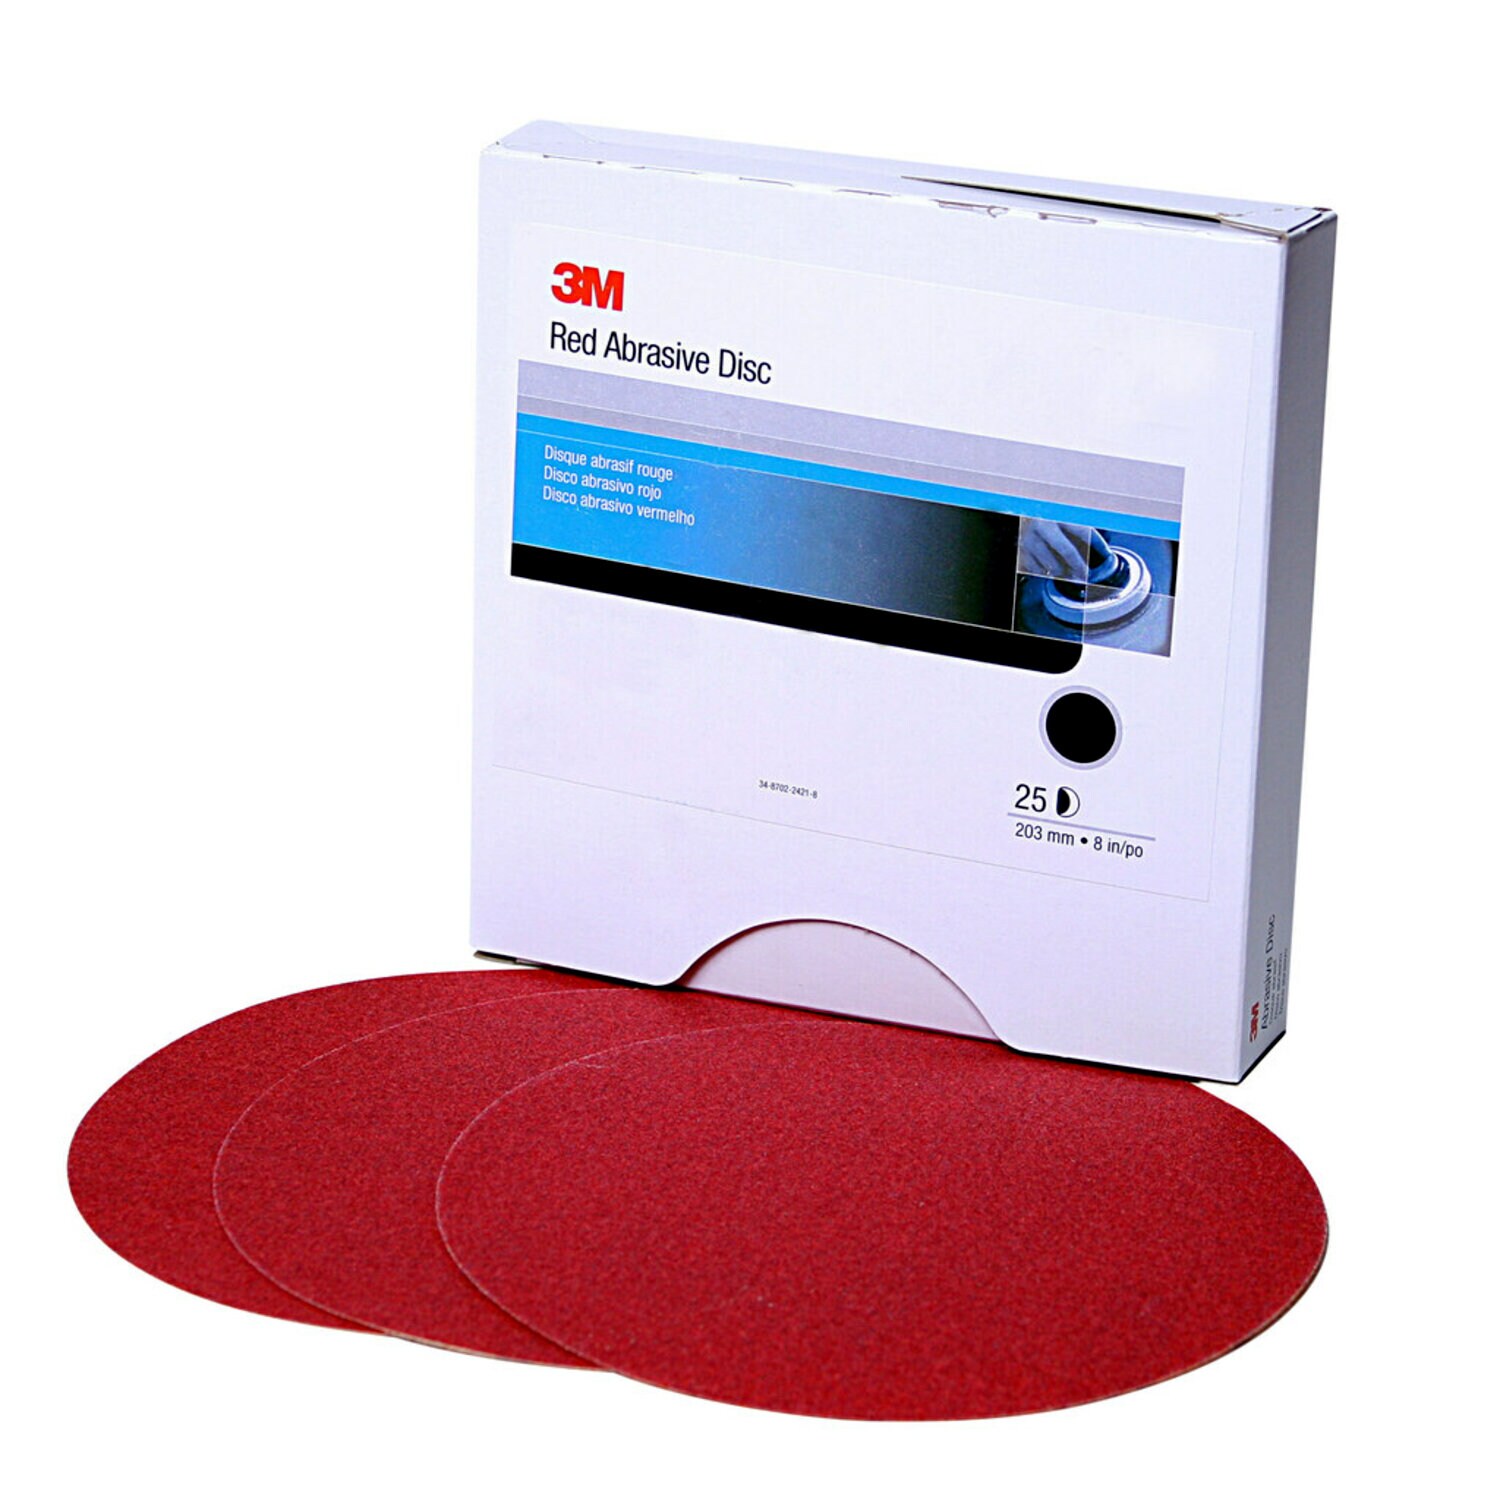 7000119920 - 3M Hookit Red Abrasive Disc, 01677, 8 in, P80, 25 discs per carton, 5
cartons per case